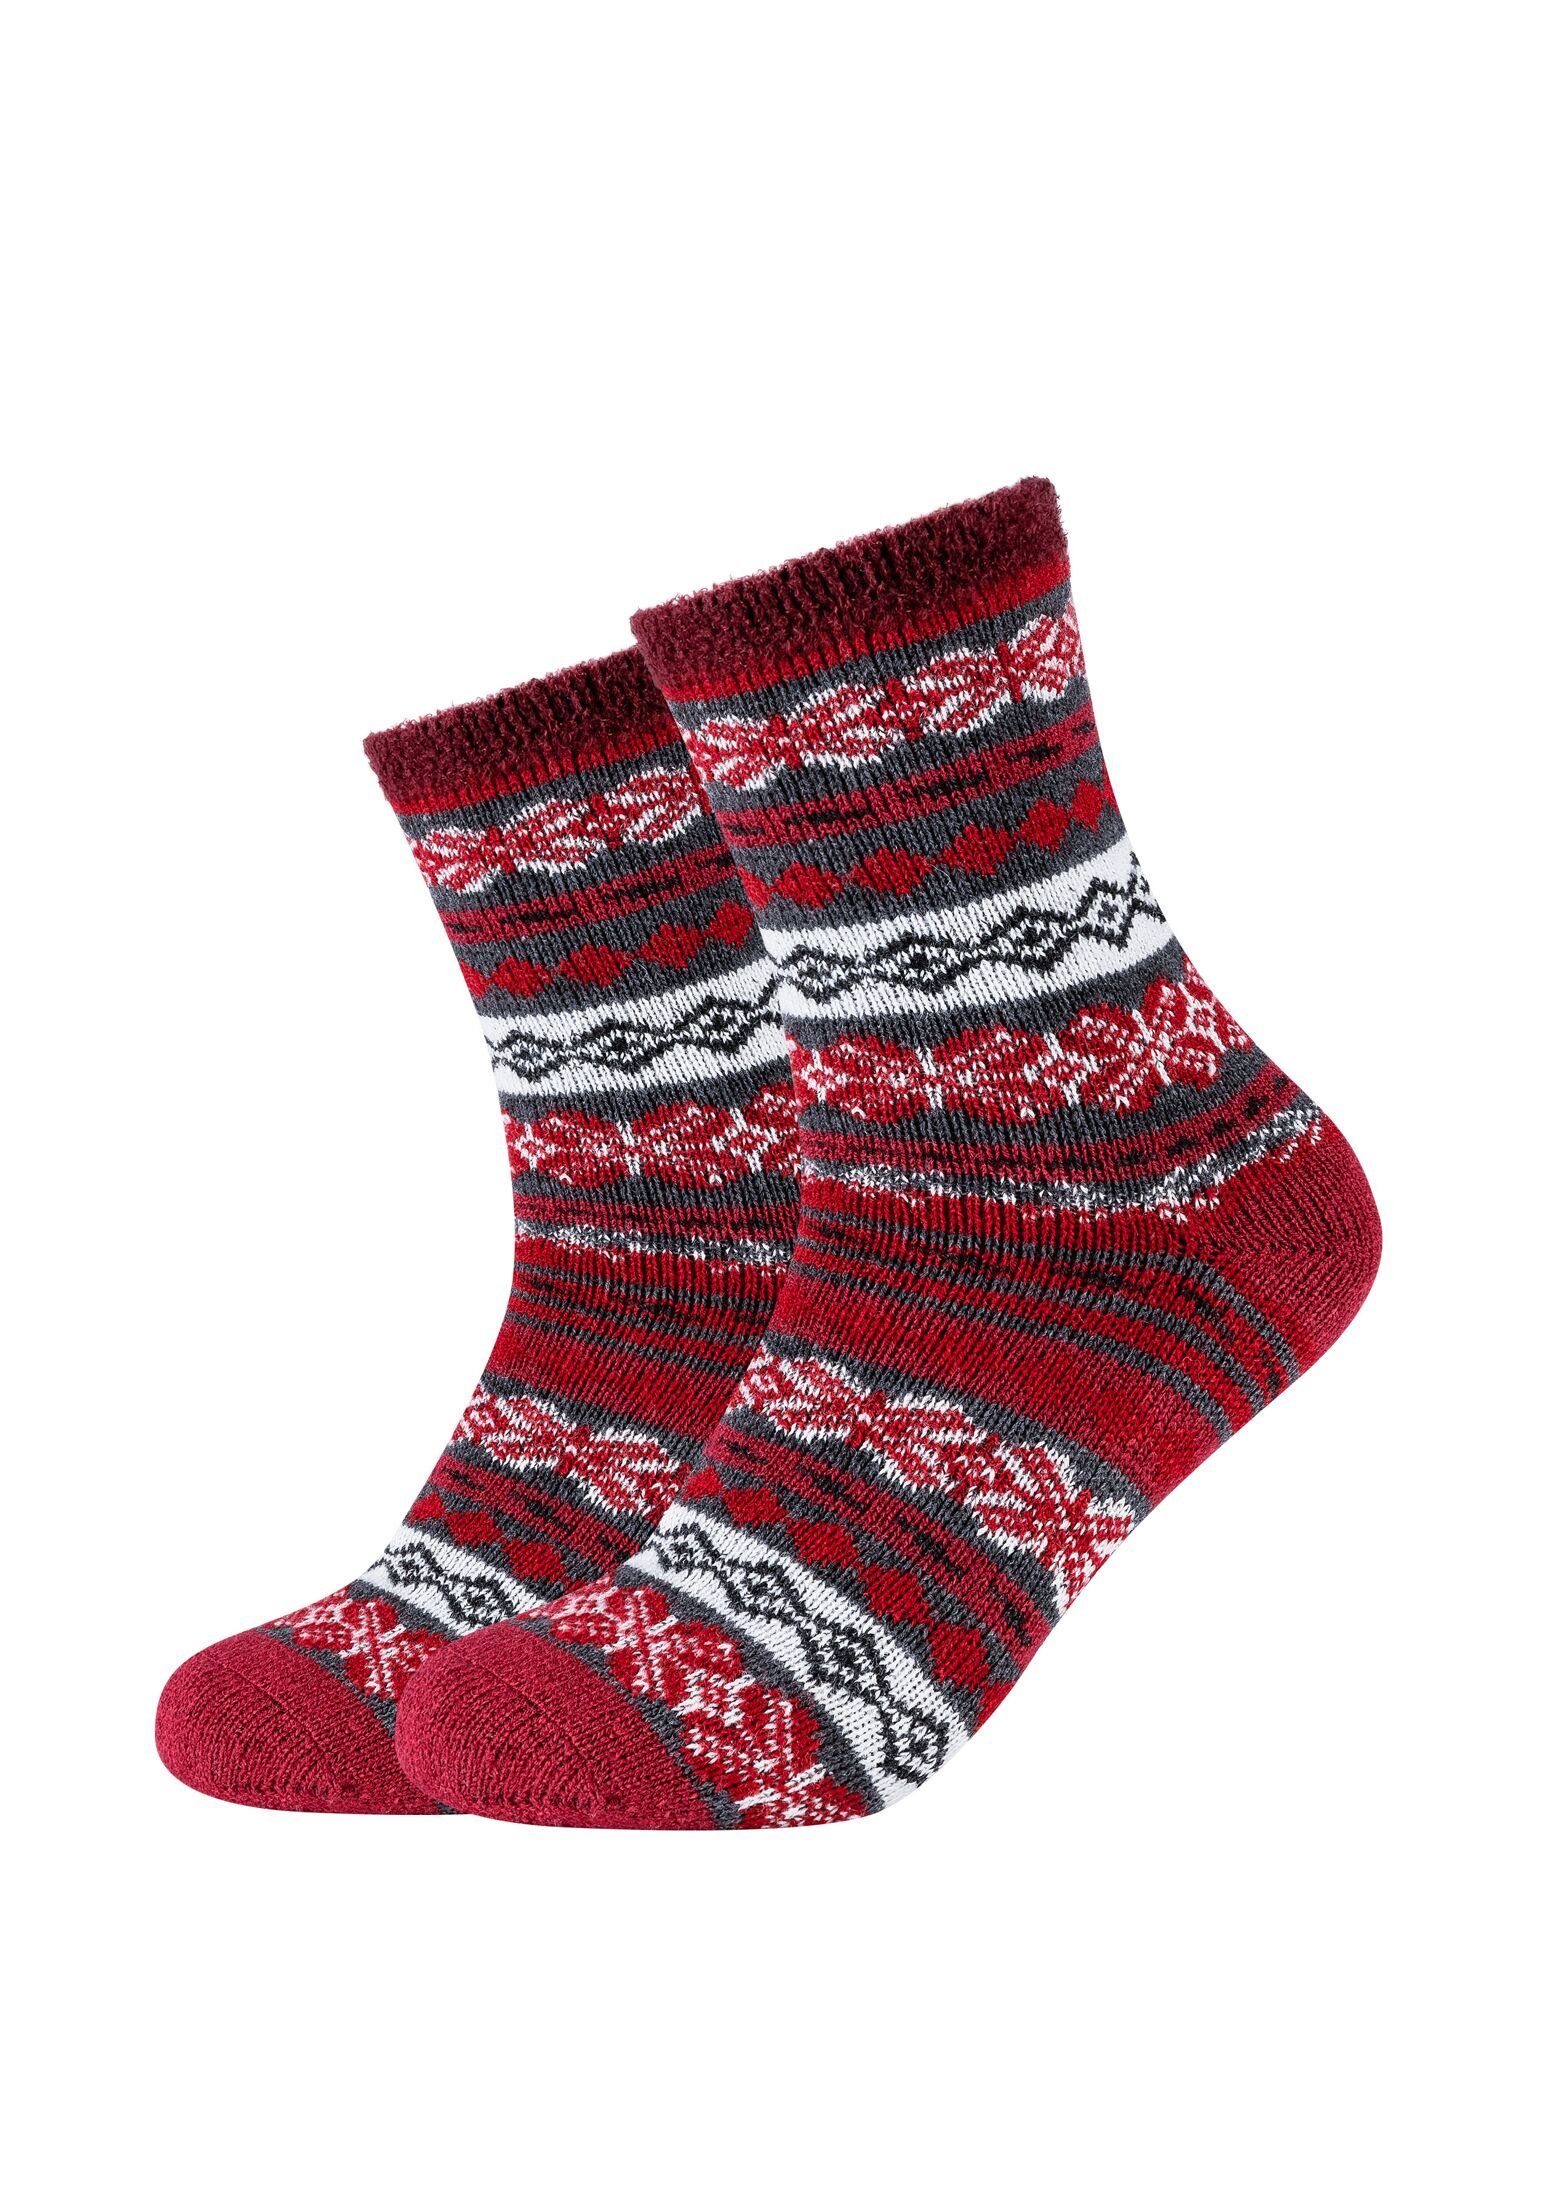 Camano Socken Socken Cosy Norweger Kuschelsocken Flauschig Warm Damen oxblood red